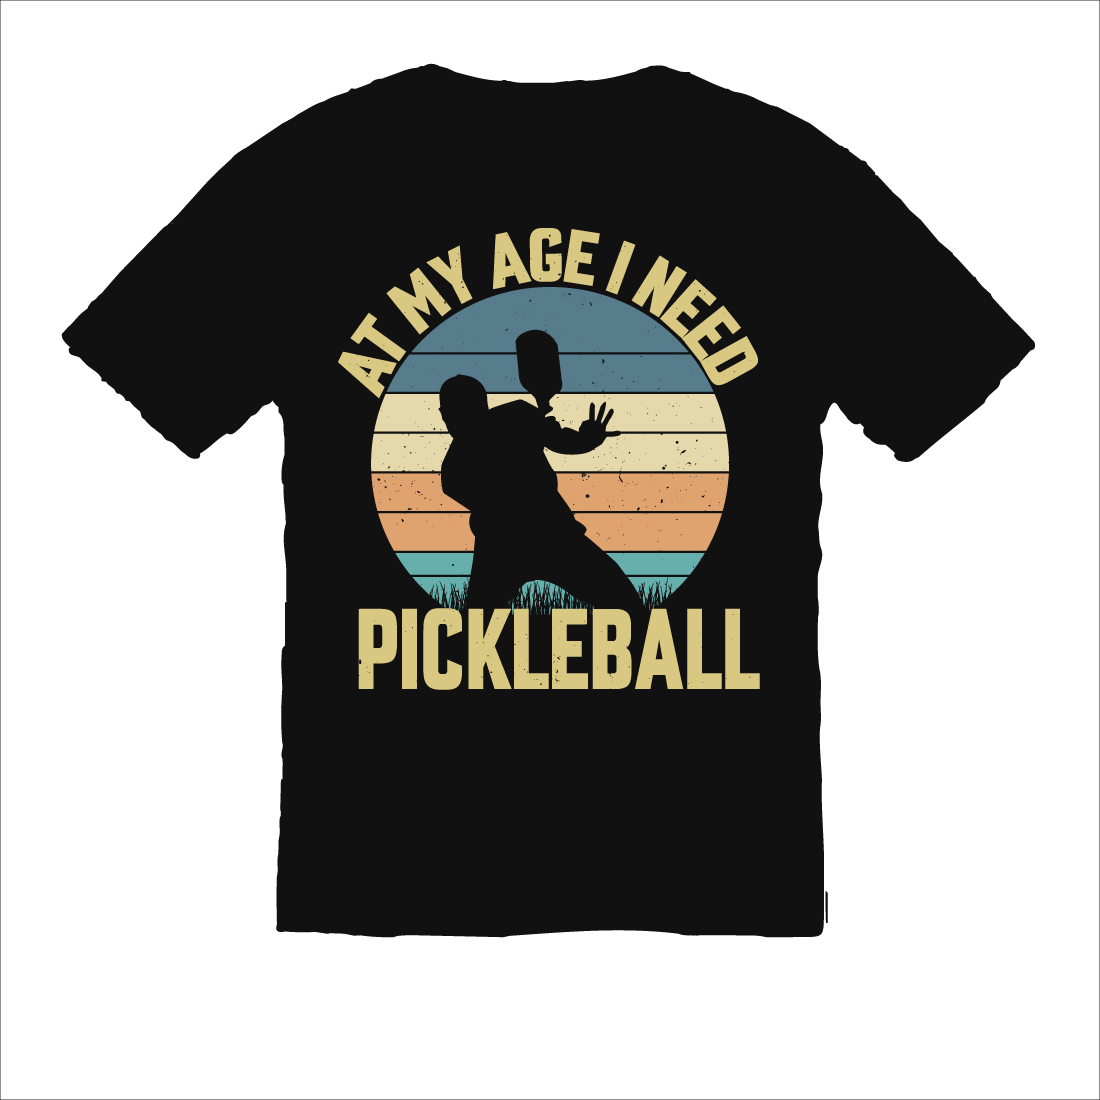 Pickleball tshirt design preview image.